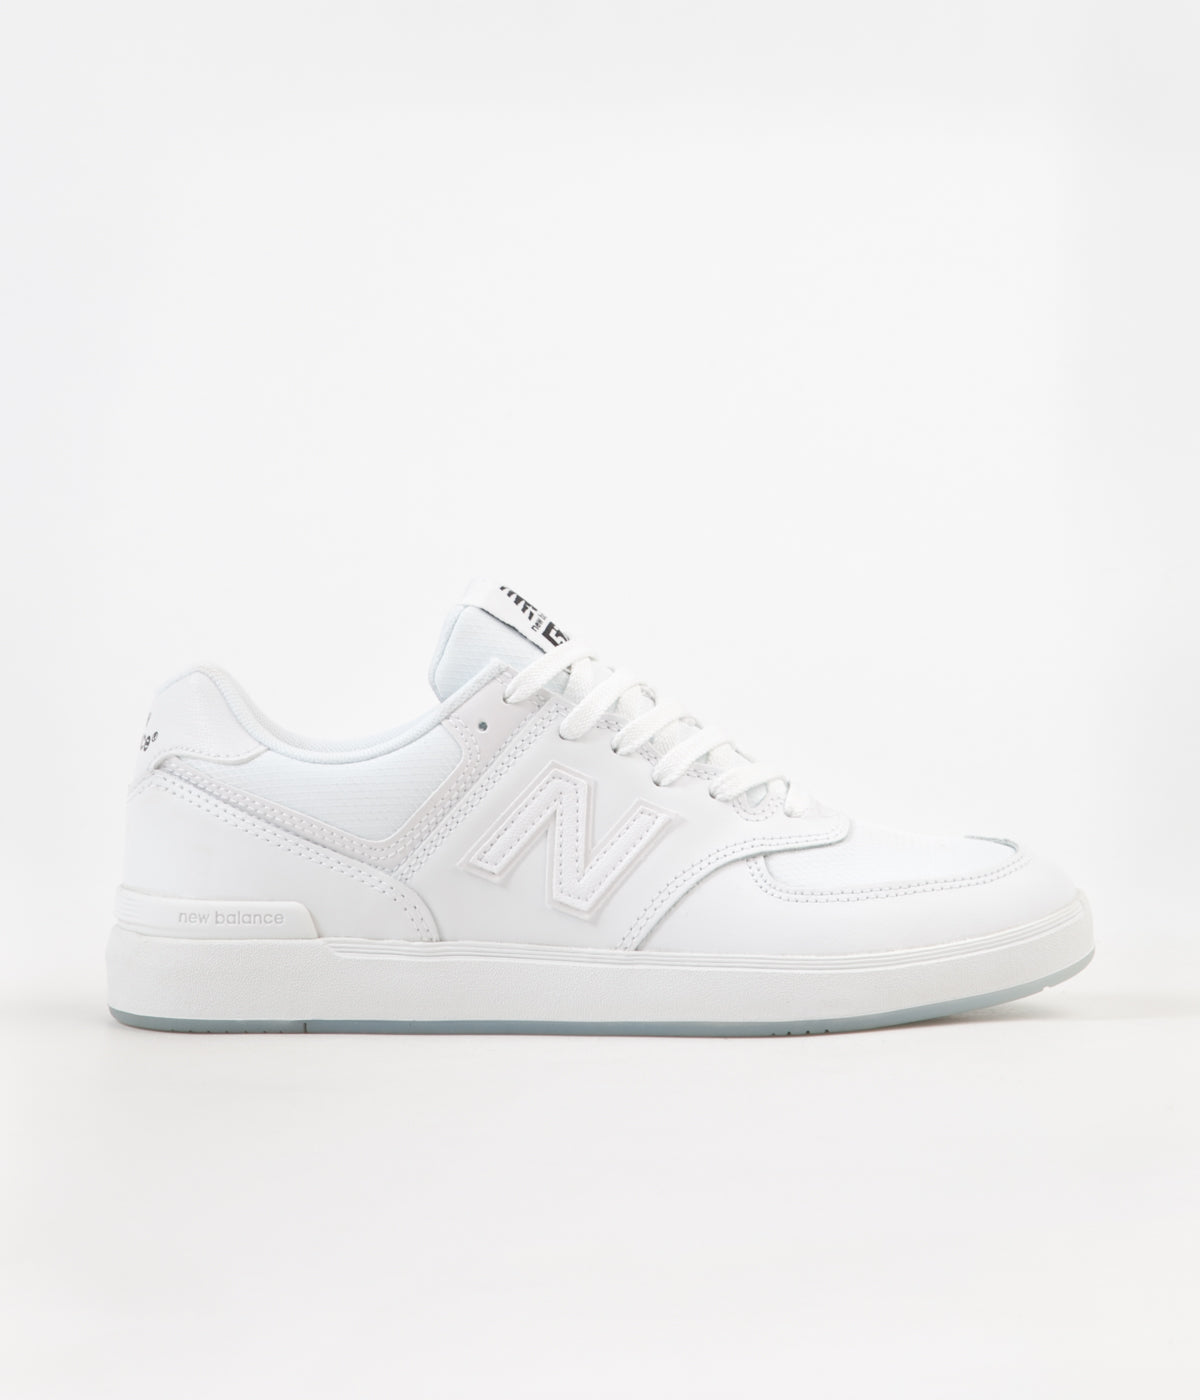 New Balance All Coasts 574 Shoes - White / White | Flatspot